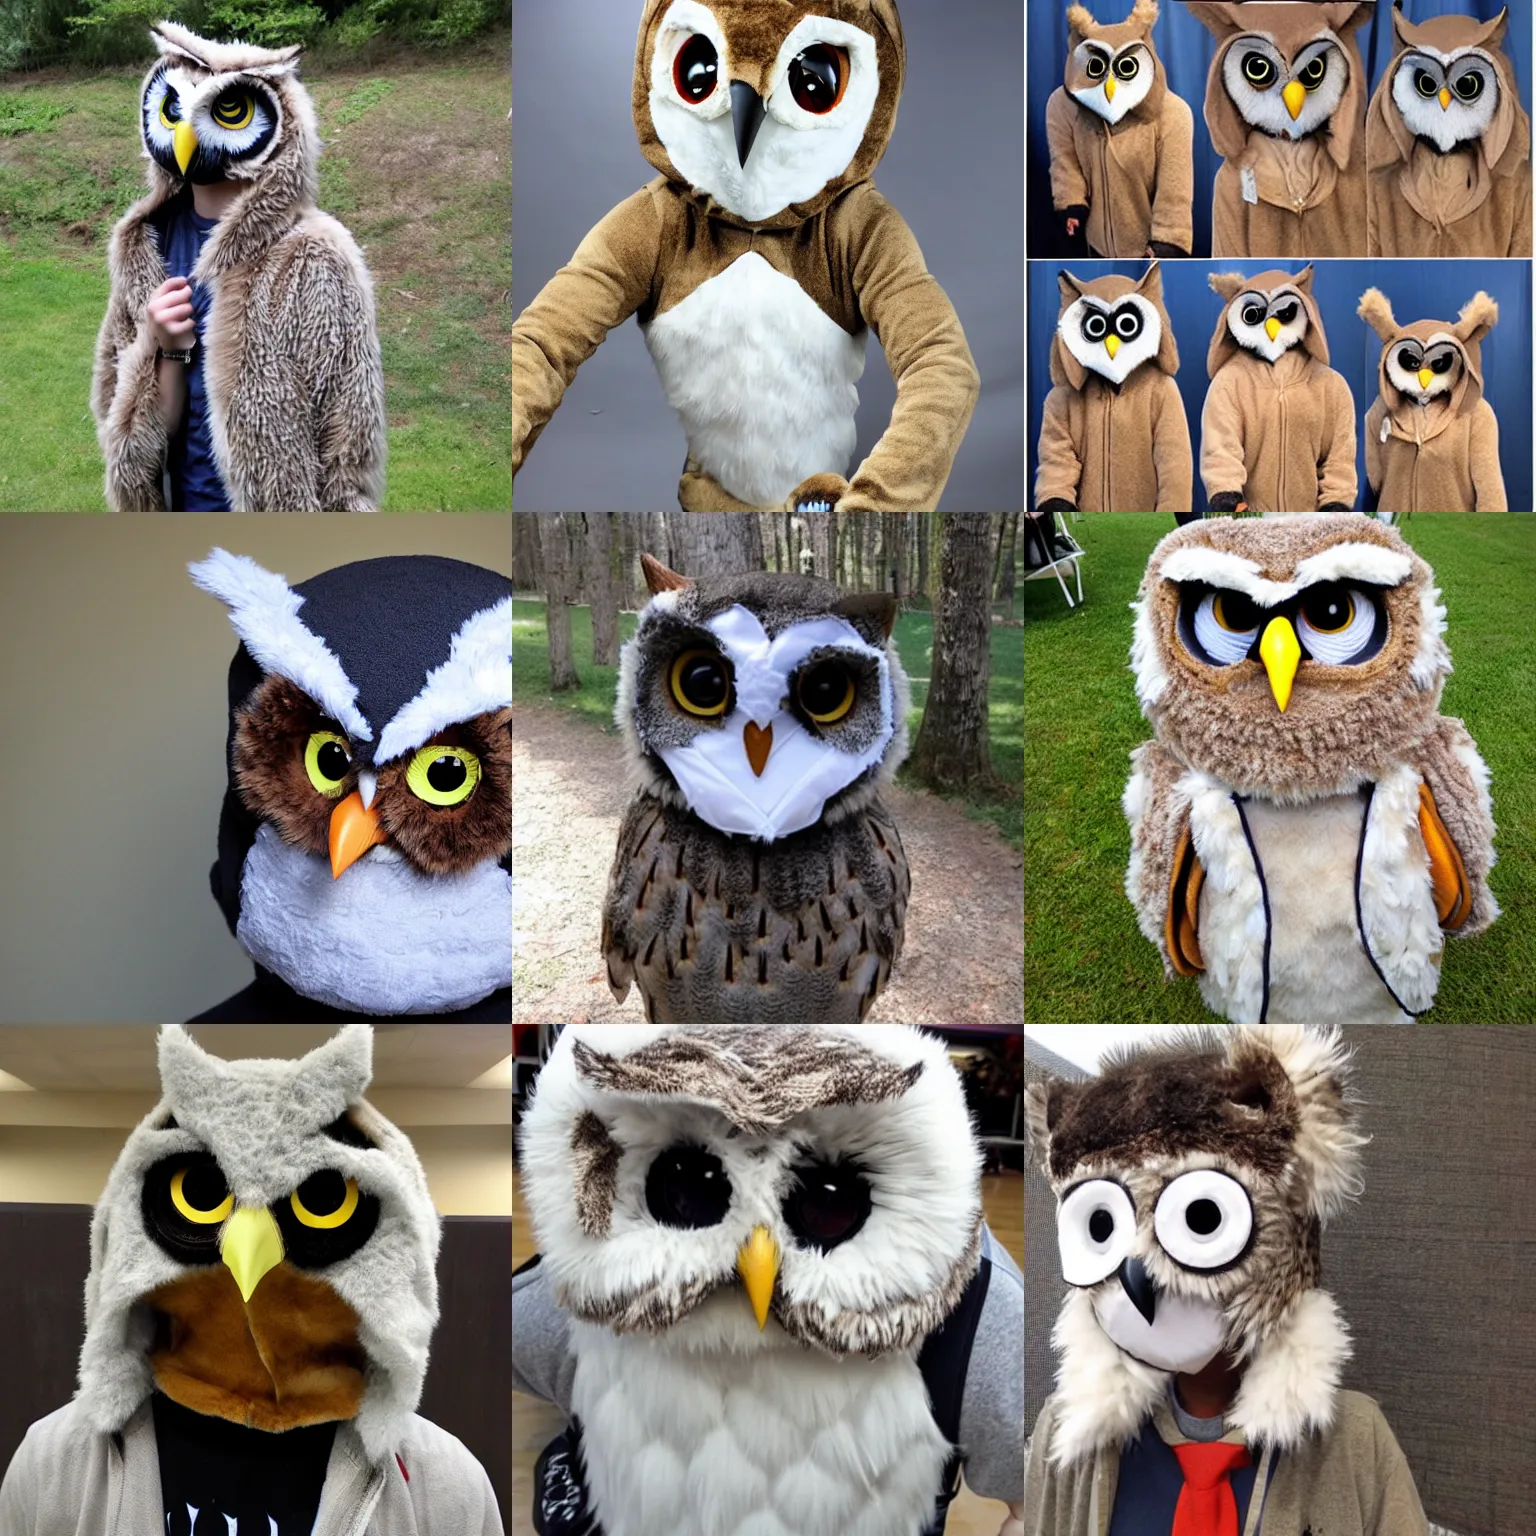 Prompt: Owl fursuit